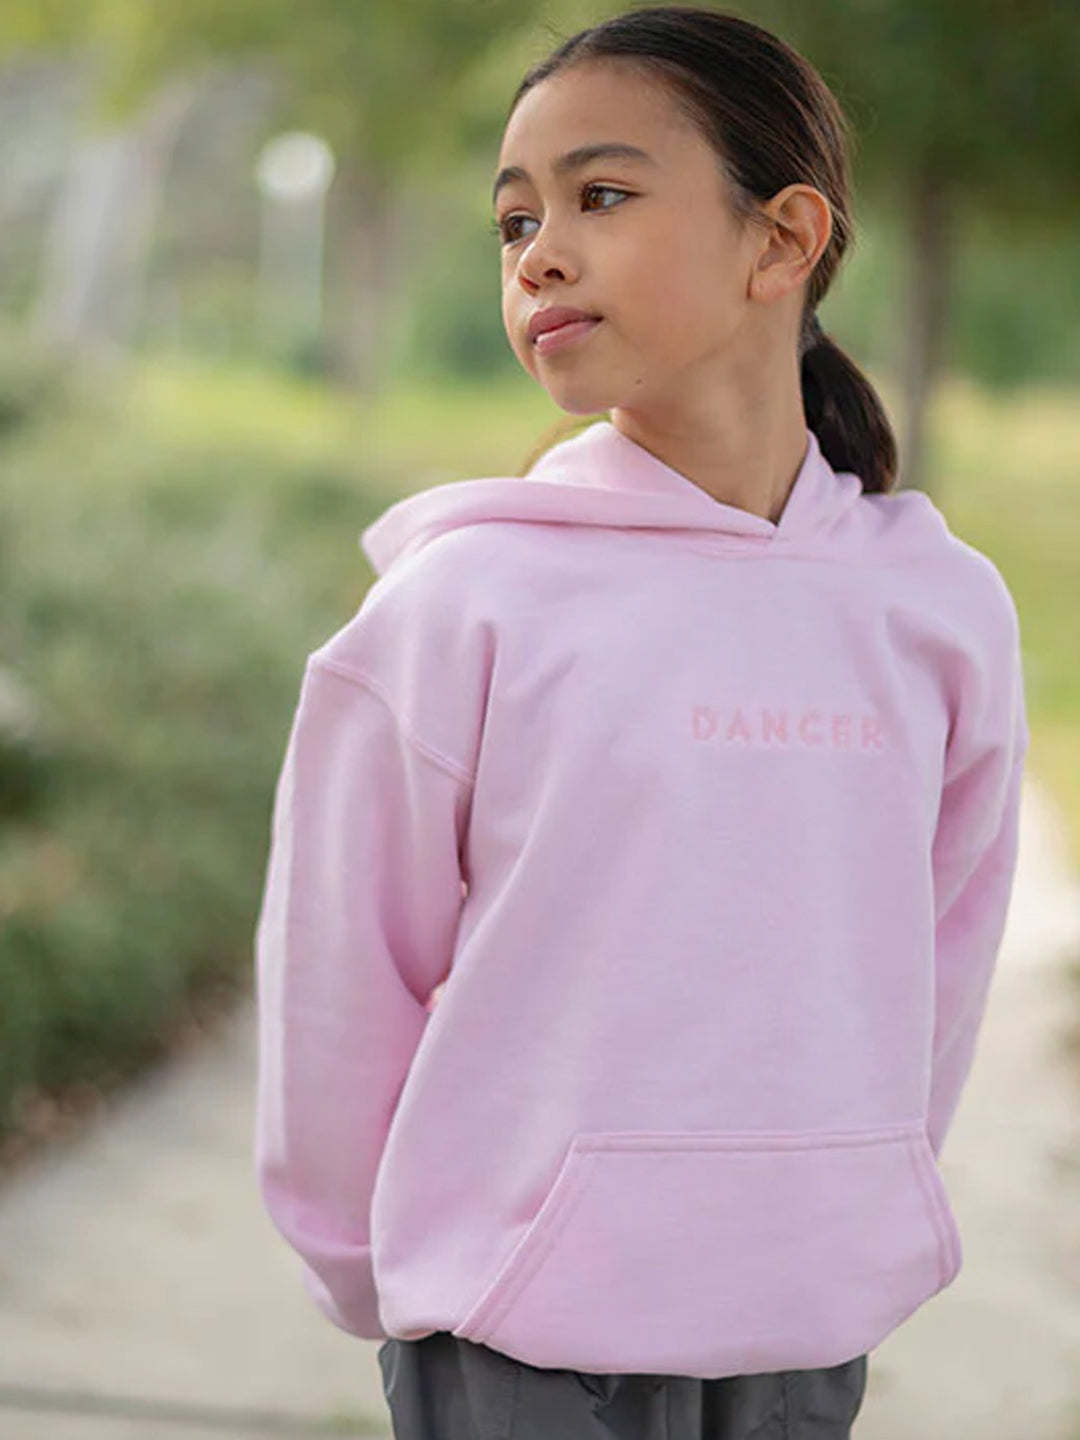 Dancer Embroidered Hoodie - Child